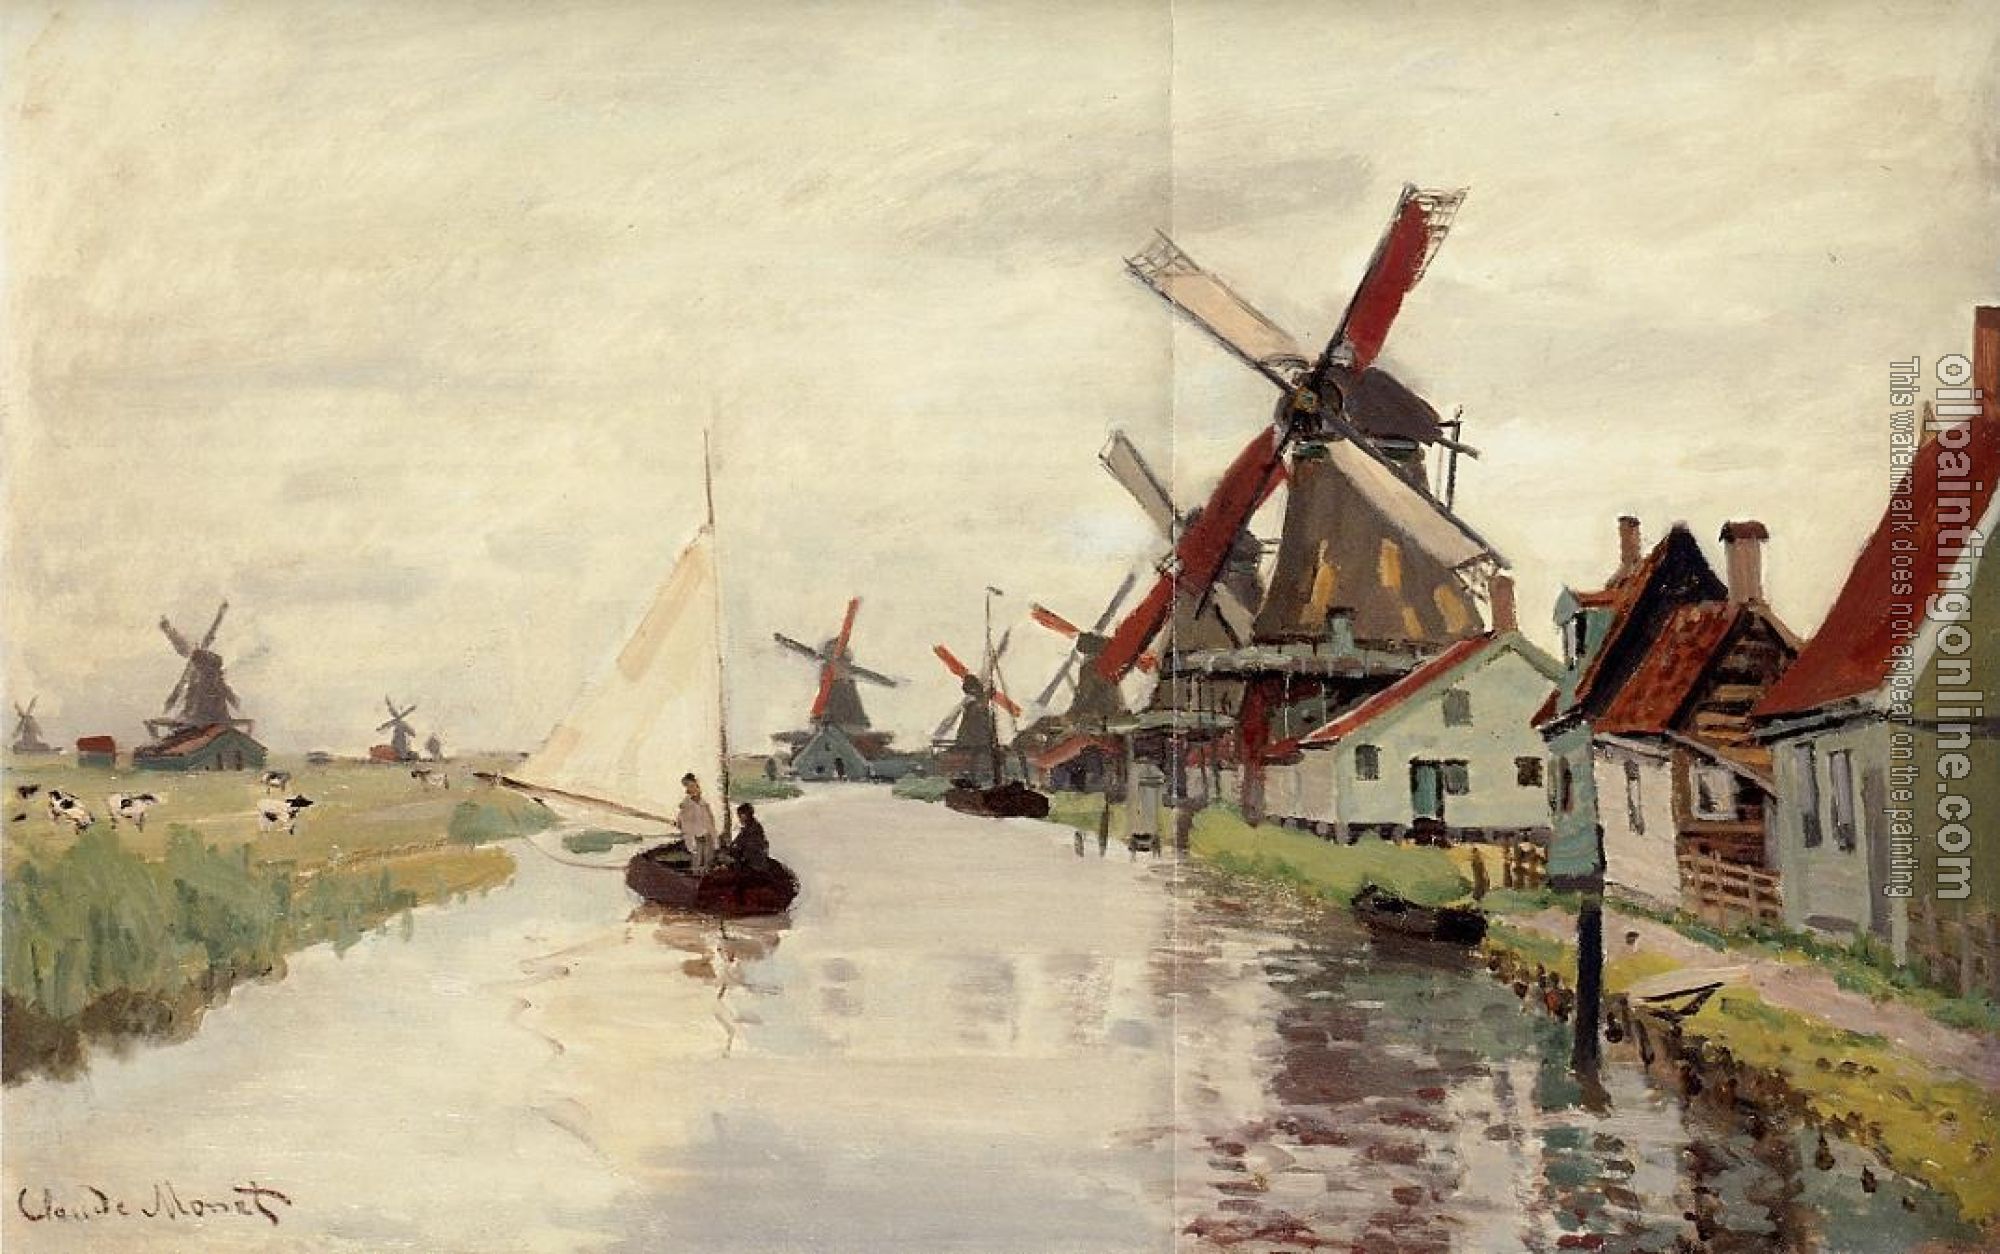 Monet, Claude Oscar - Windmills in Holland